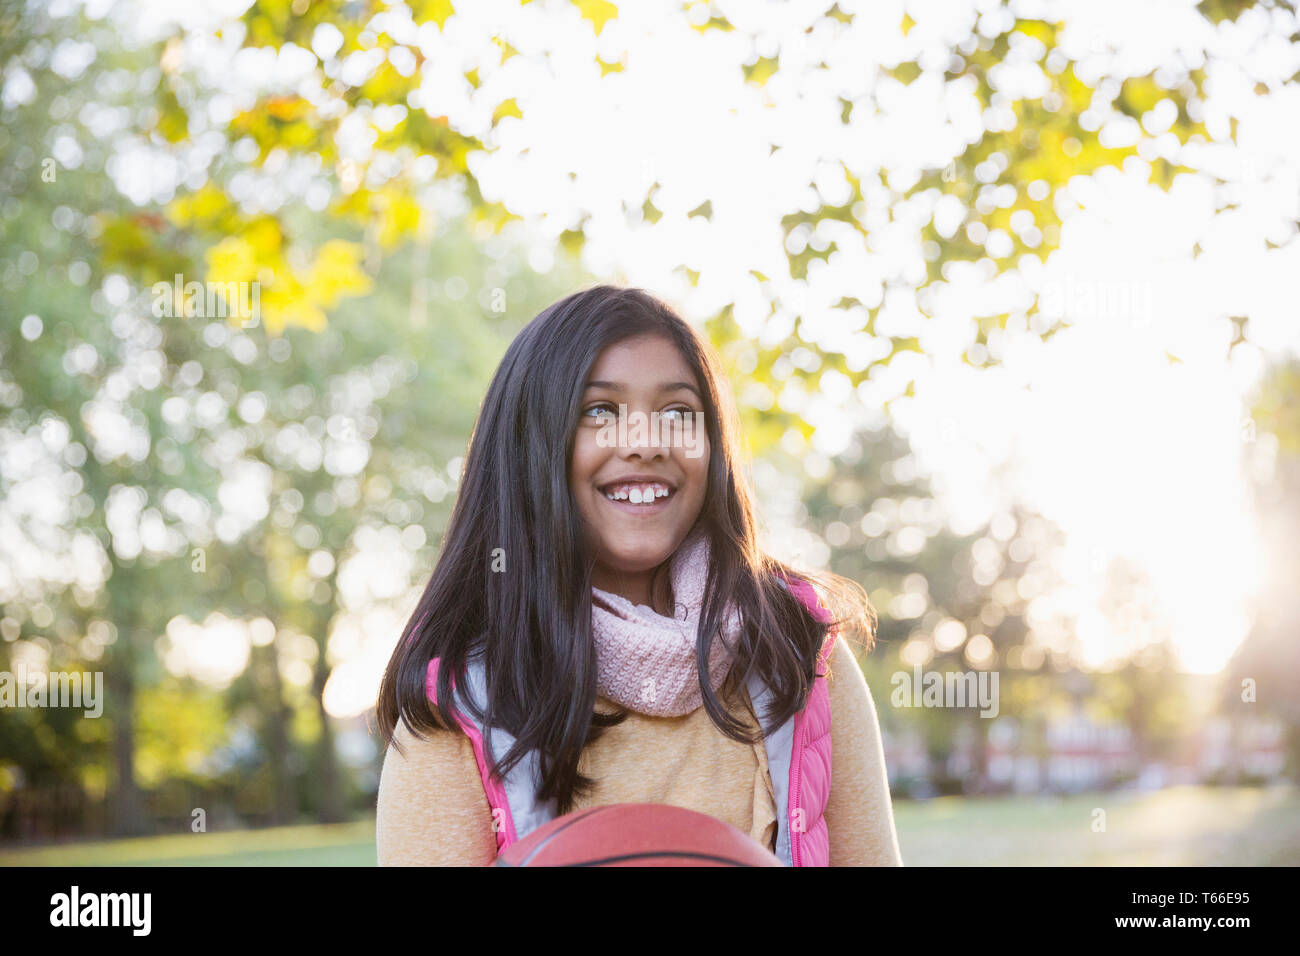 Smiling girl in autumn park Stock Photo